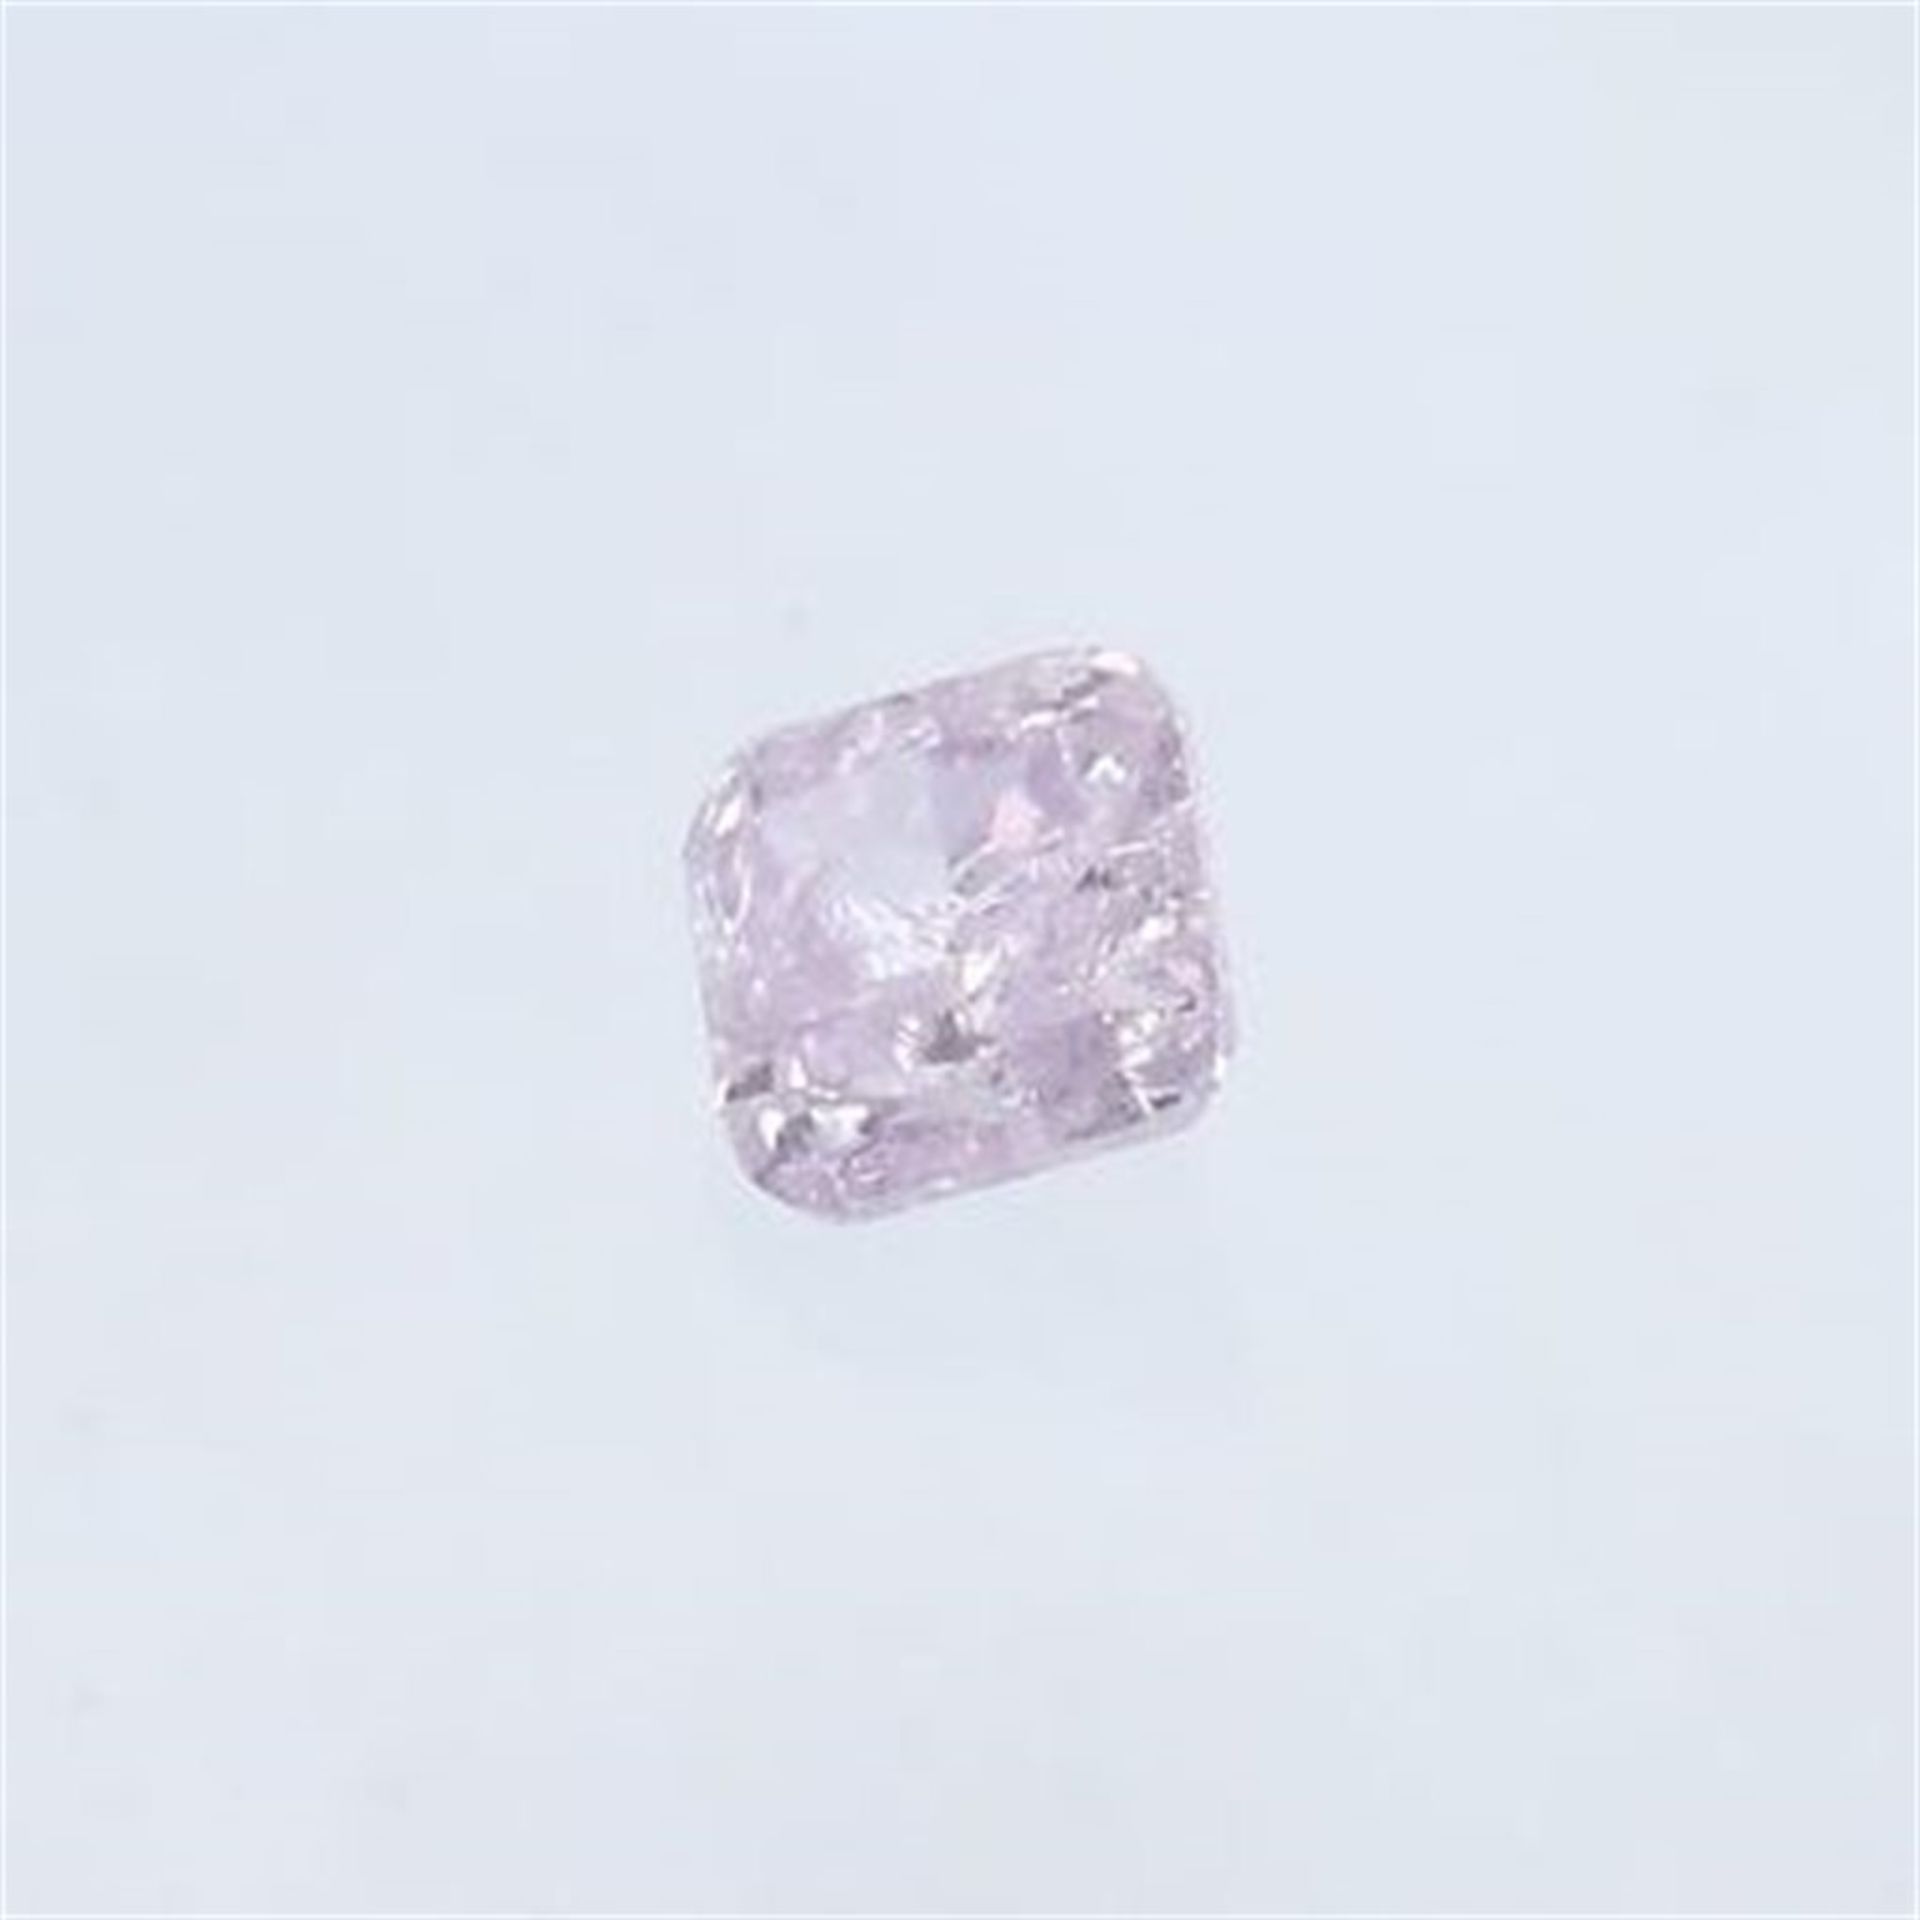 IGI Certified 0.12 ct. Fancy Pink Diamond - I2 - Image 3 of 4